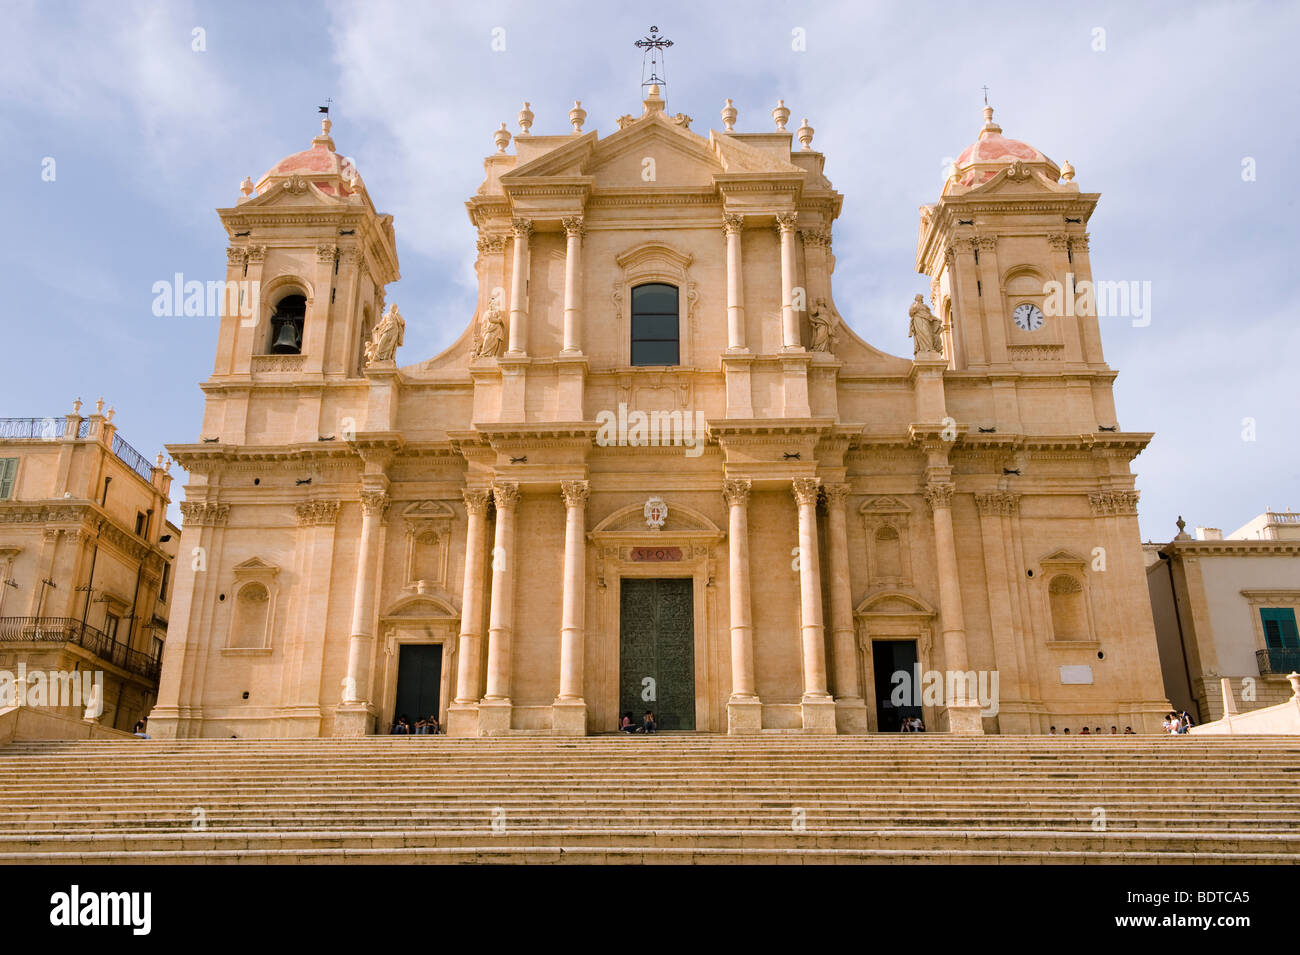 Restaurierte barocke Kathedrale San Nicolo - Noto, Sizilien Stockfoto